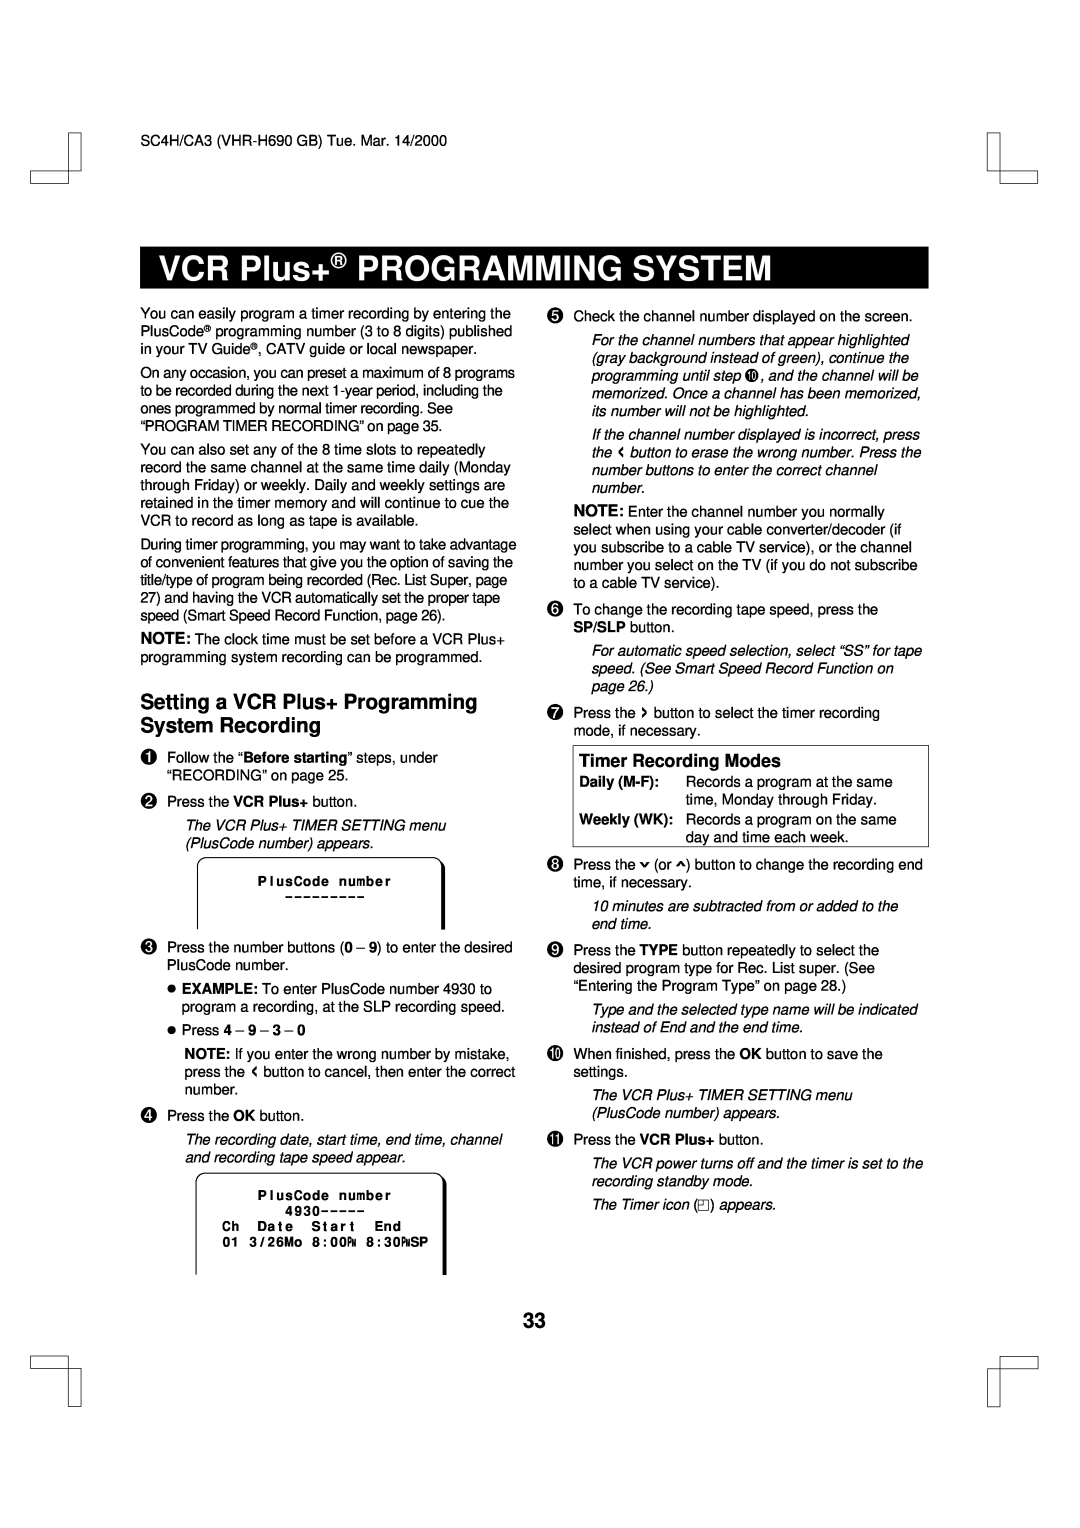 Sanyo VHR-H690 VCR Plus+ PROGRAMMING SYSTEM, Setting a VCR Plus+ Programming System Recording, Timer Recording Modes 